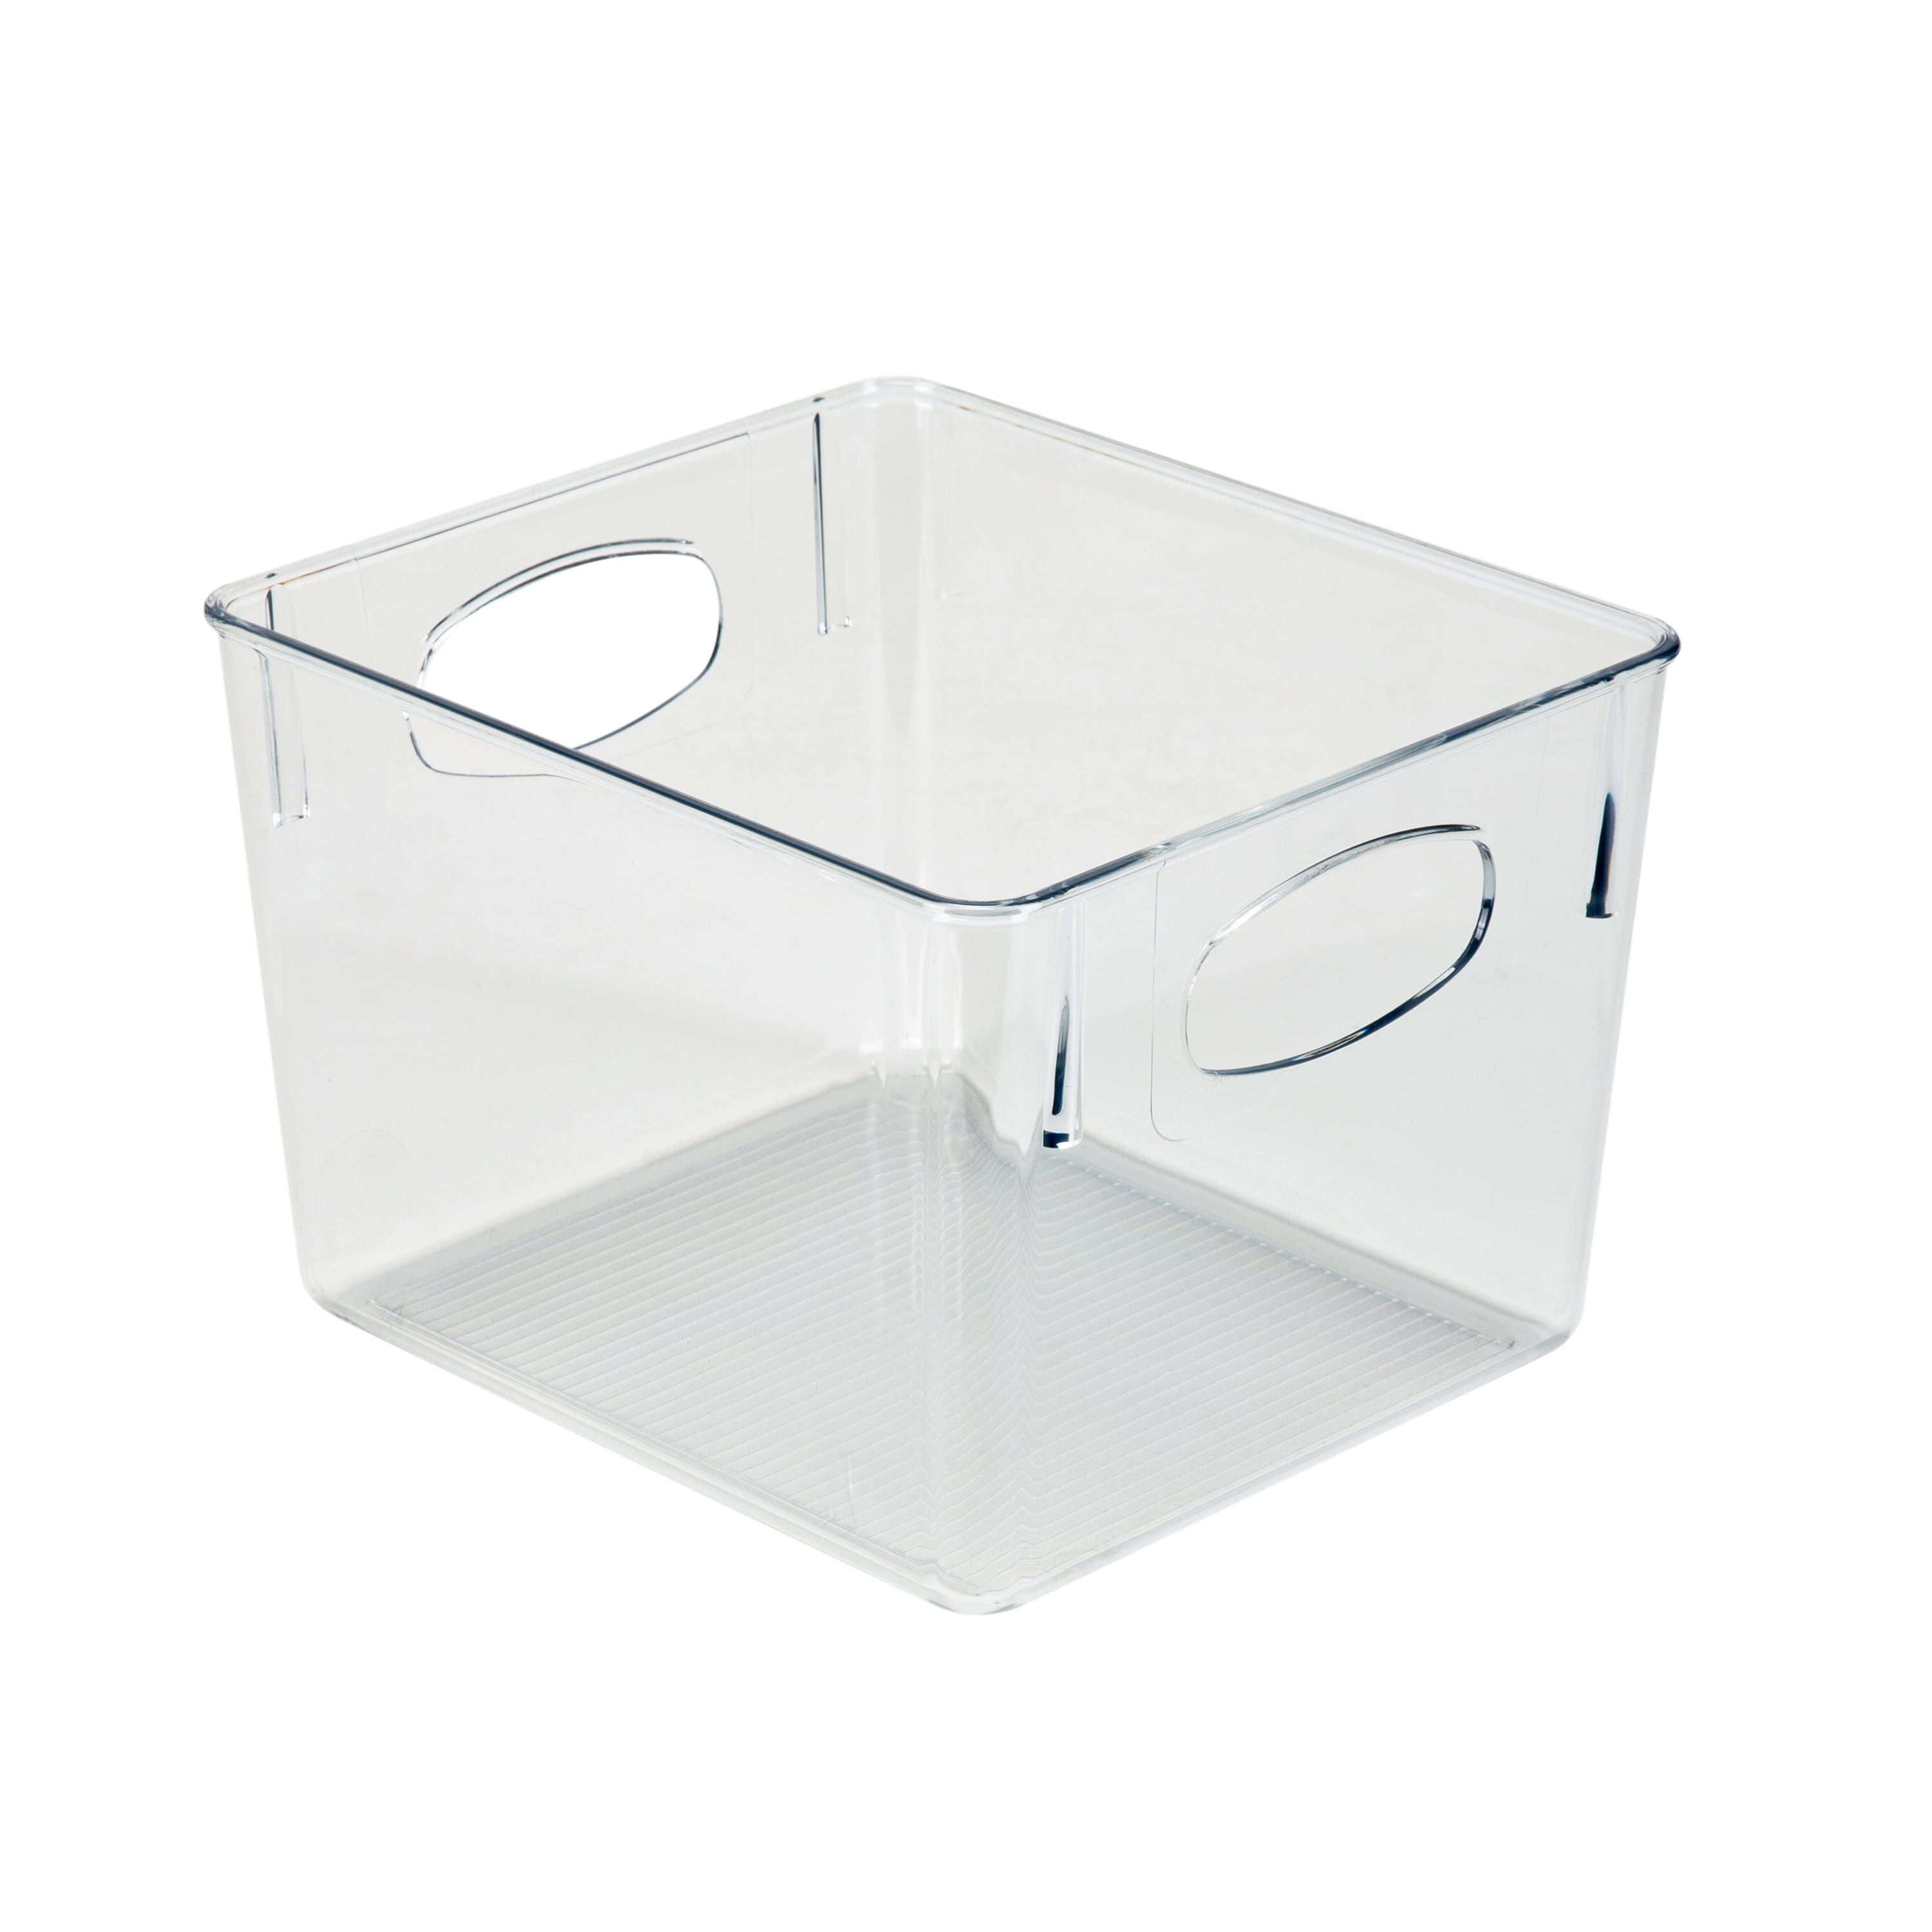 Simplify Medium Horizontal Cabinet Organizer, Clear, 8.5 x 7.5 x